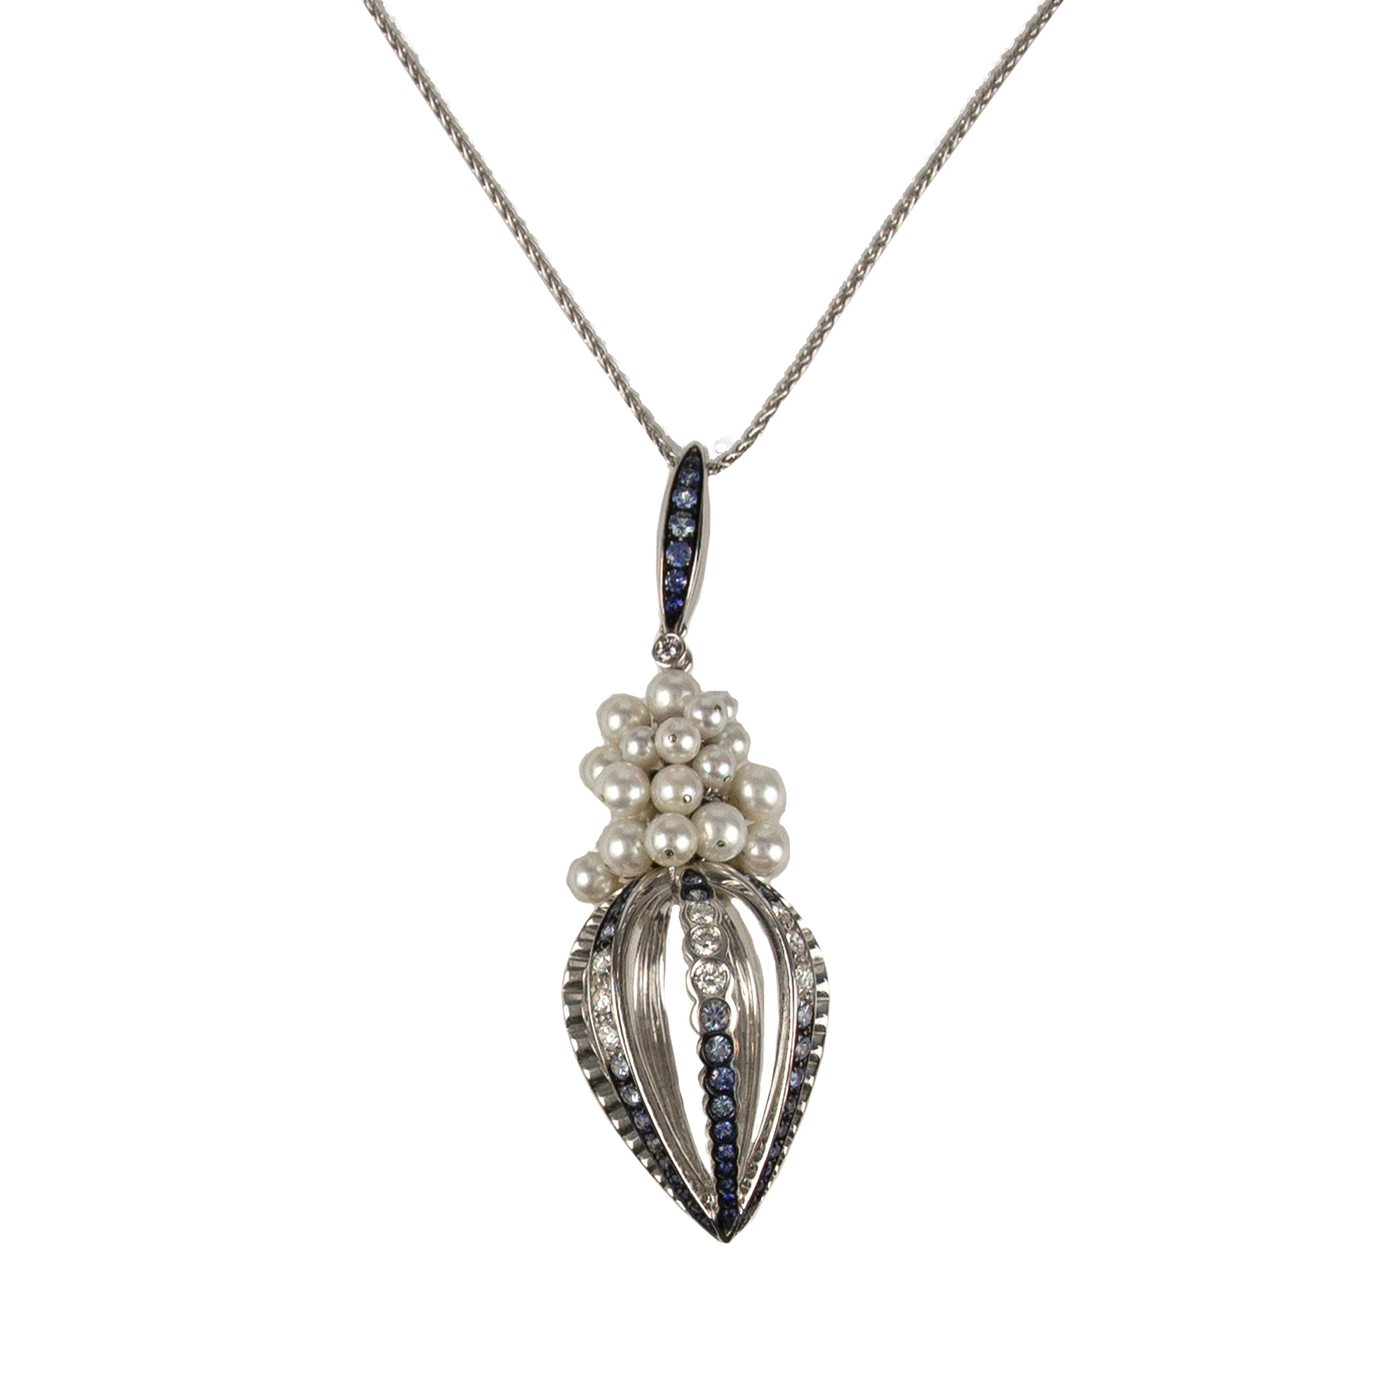 IO SI 18K White Gold 0.98ctw Diamond & Sapphire Necklace